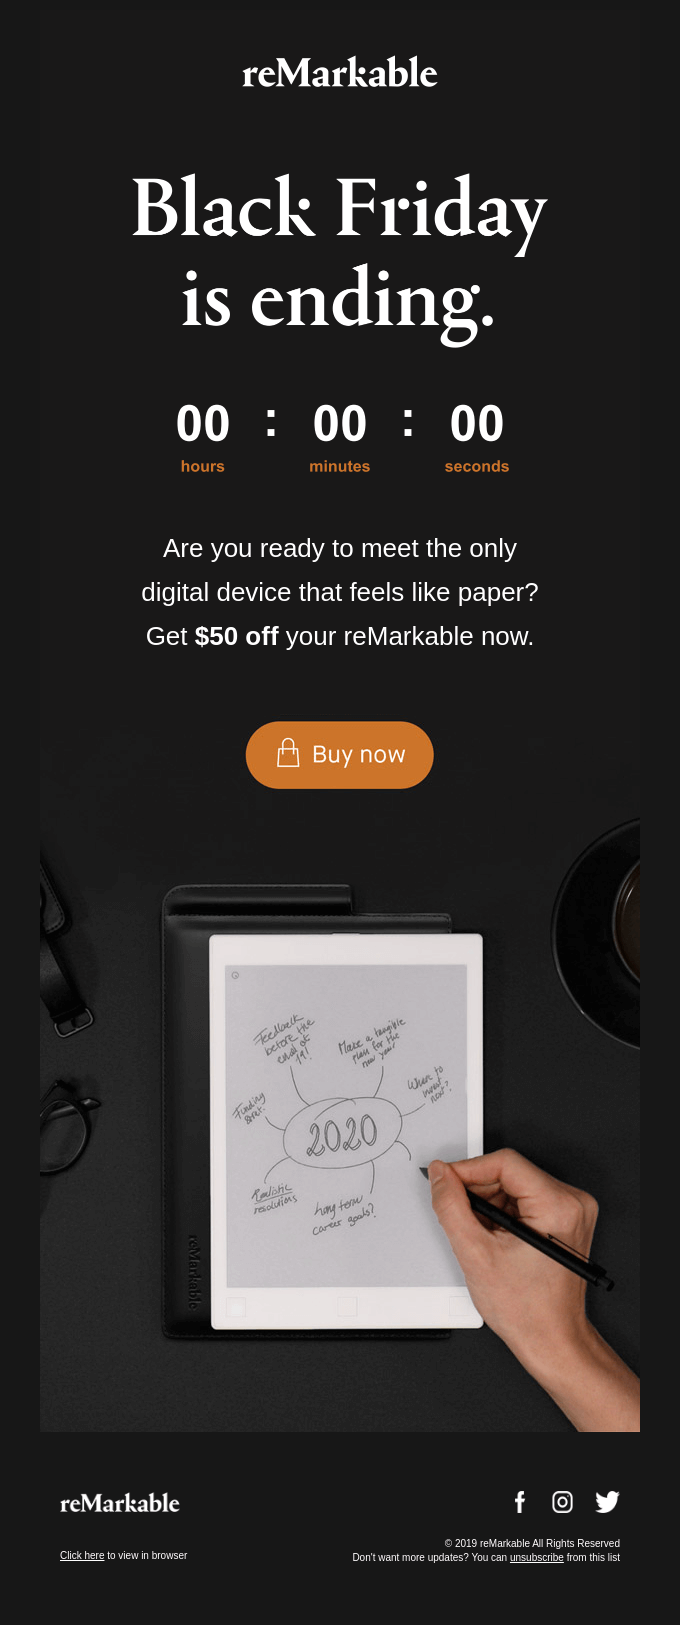 Get $50 off your reMarkable paper tablet